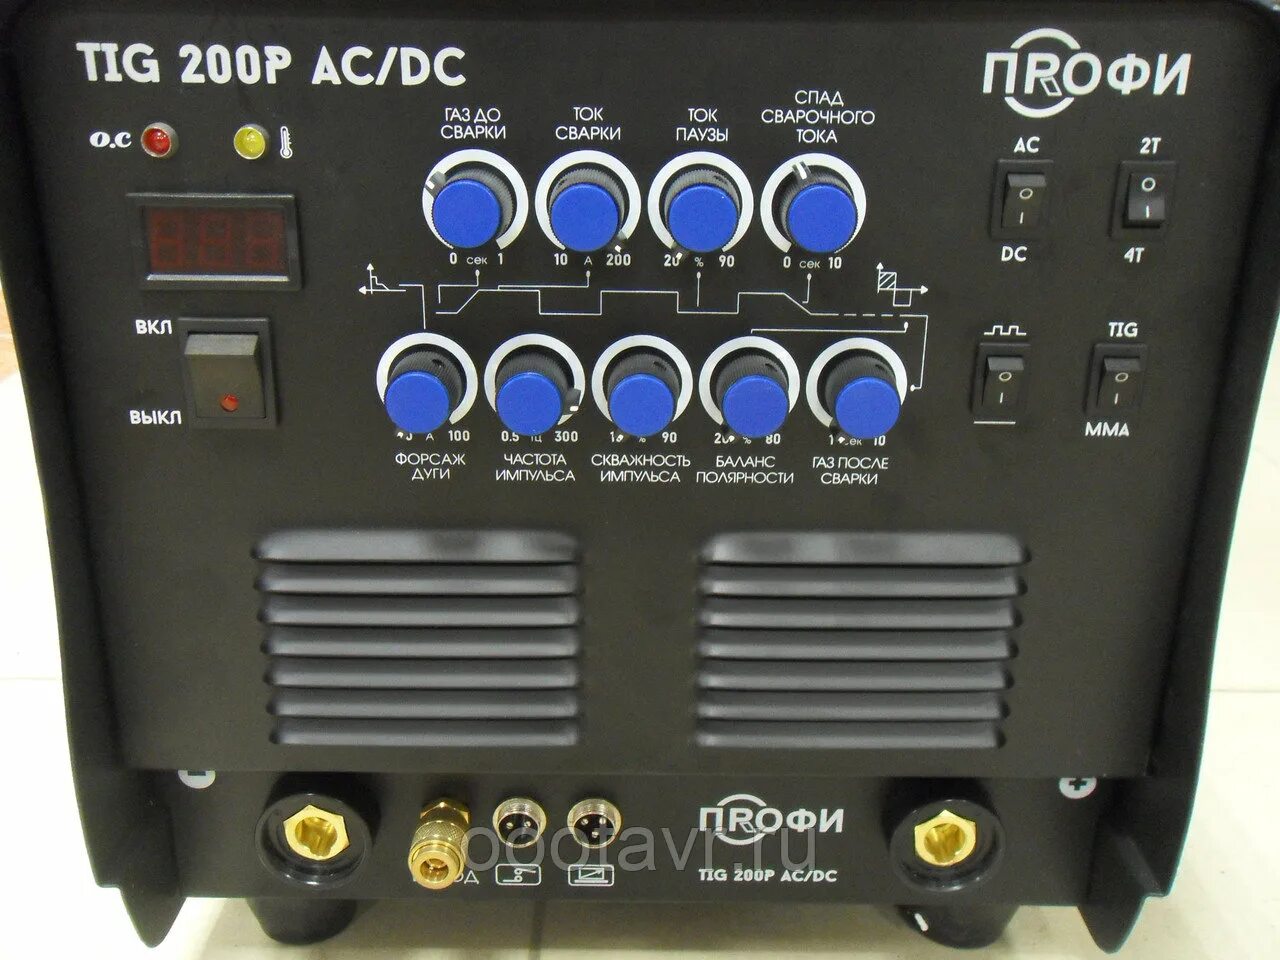 Брима тиг. Профи Tig 200p AC/DC. Инвертор сварочный Tig-200 p-AC/DC профи. Сварочный инвертор Tig 200p AC/DC. Инвертор BRIMA Tig-500p AC/DC 200p AC DC.